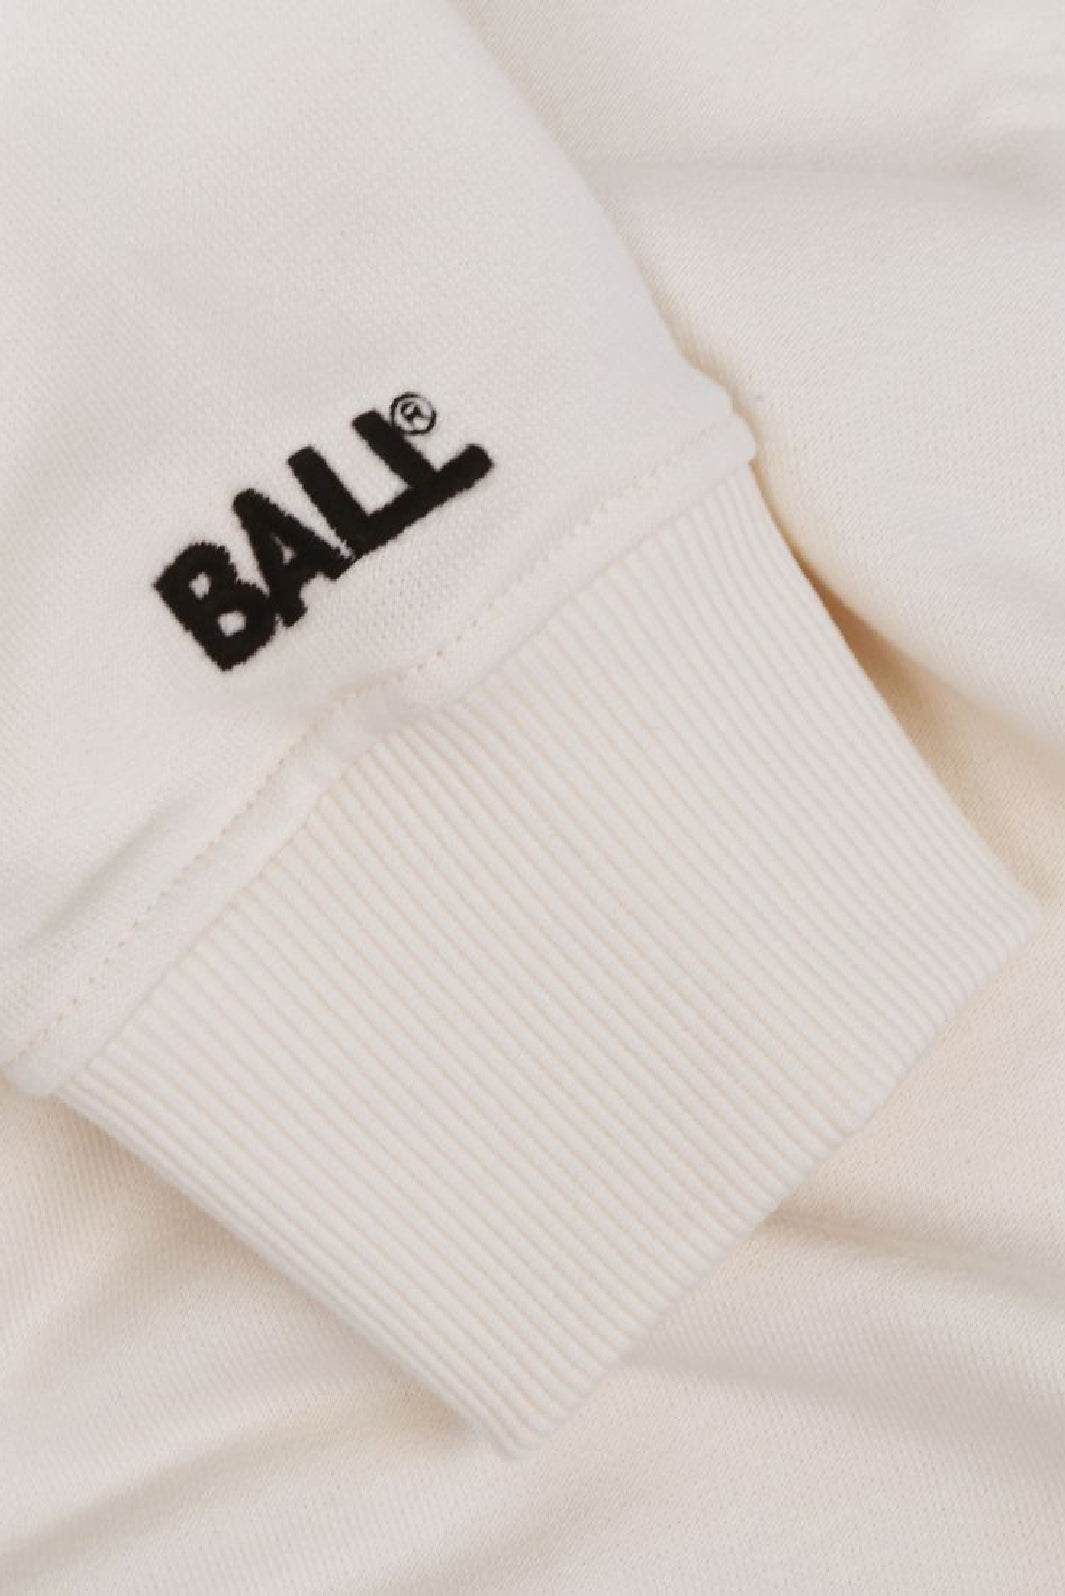 Ball - Sweatshirt L. Taylor - Offwhite Sweatshirts 